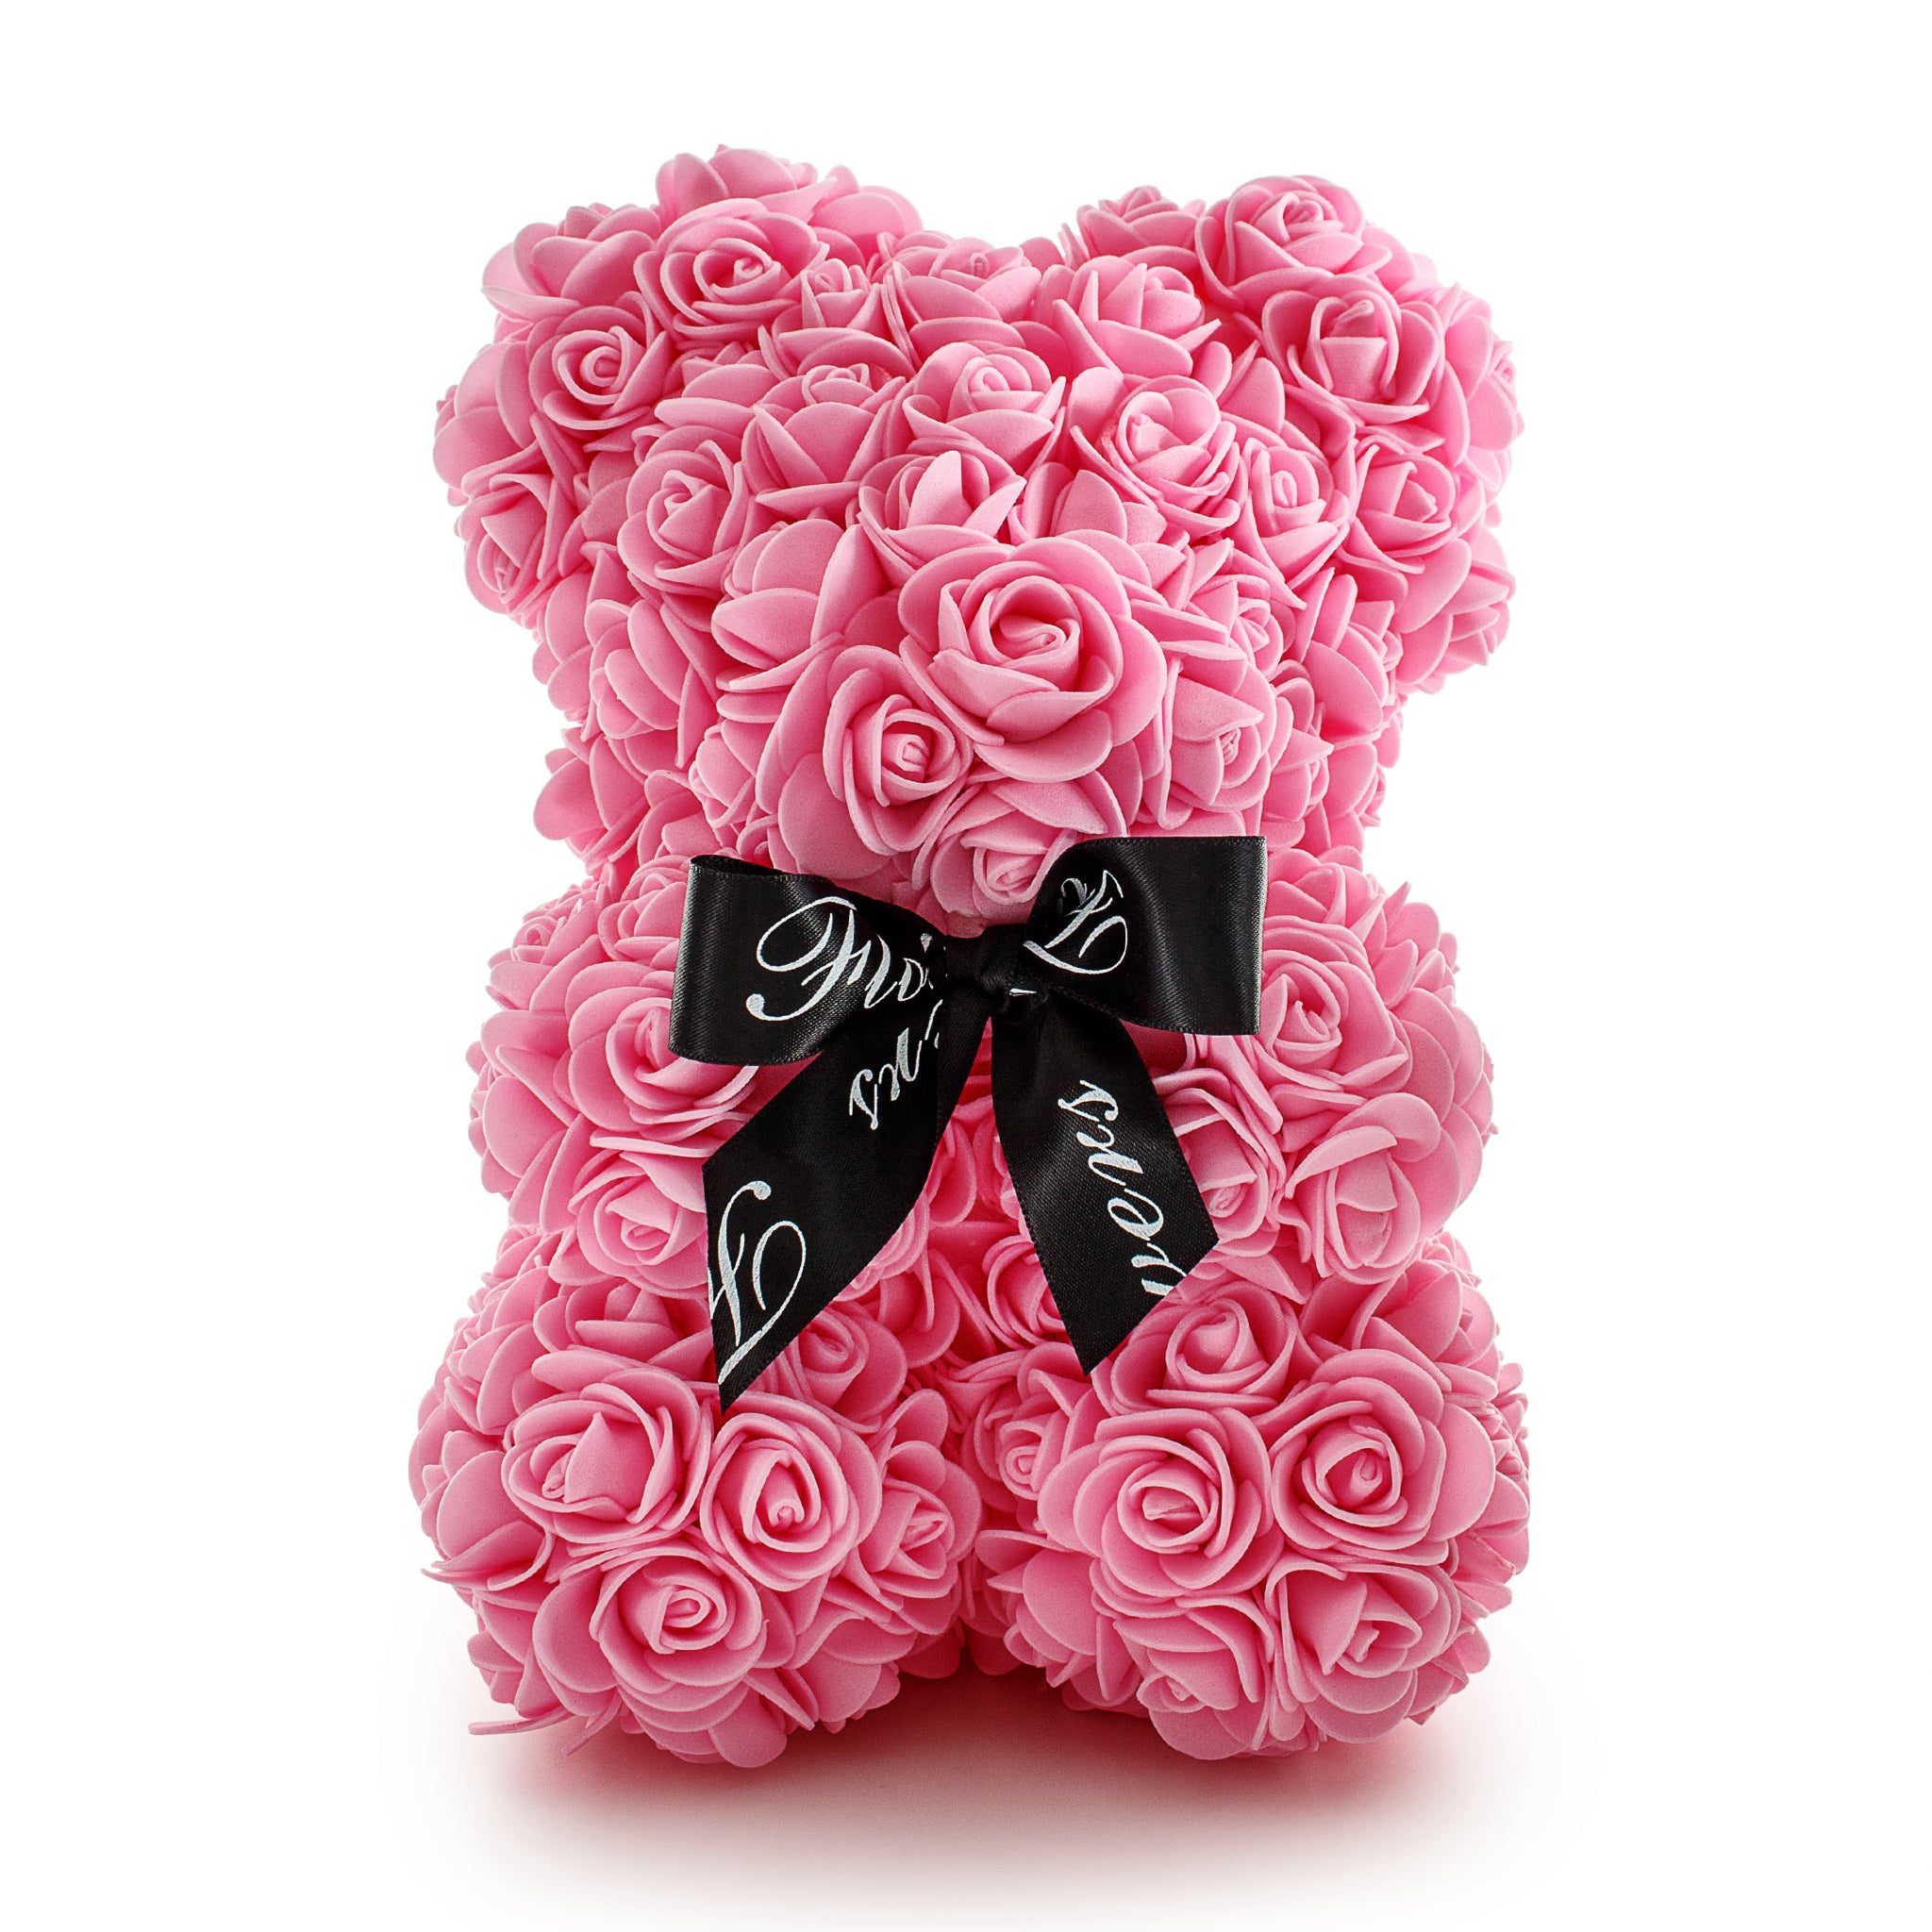 Rose Handmade Rose Teddy Bear